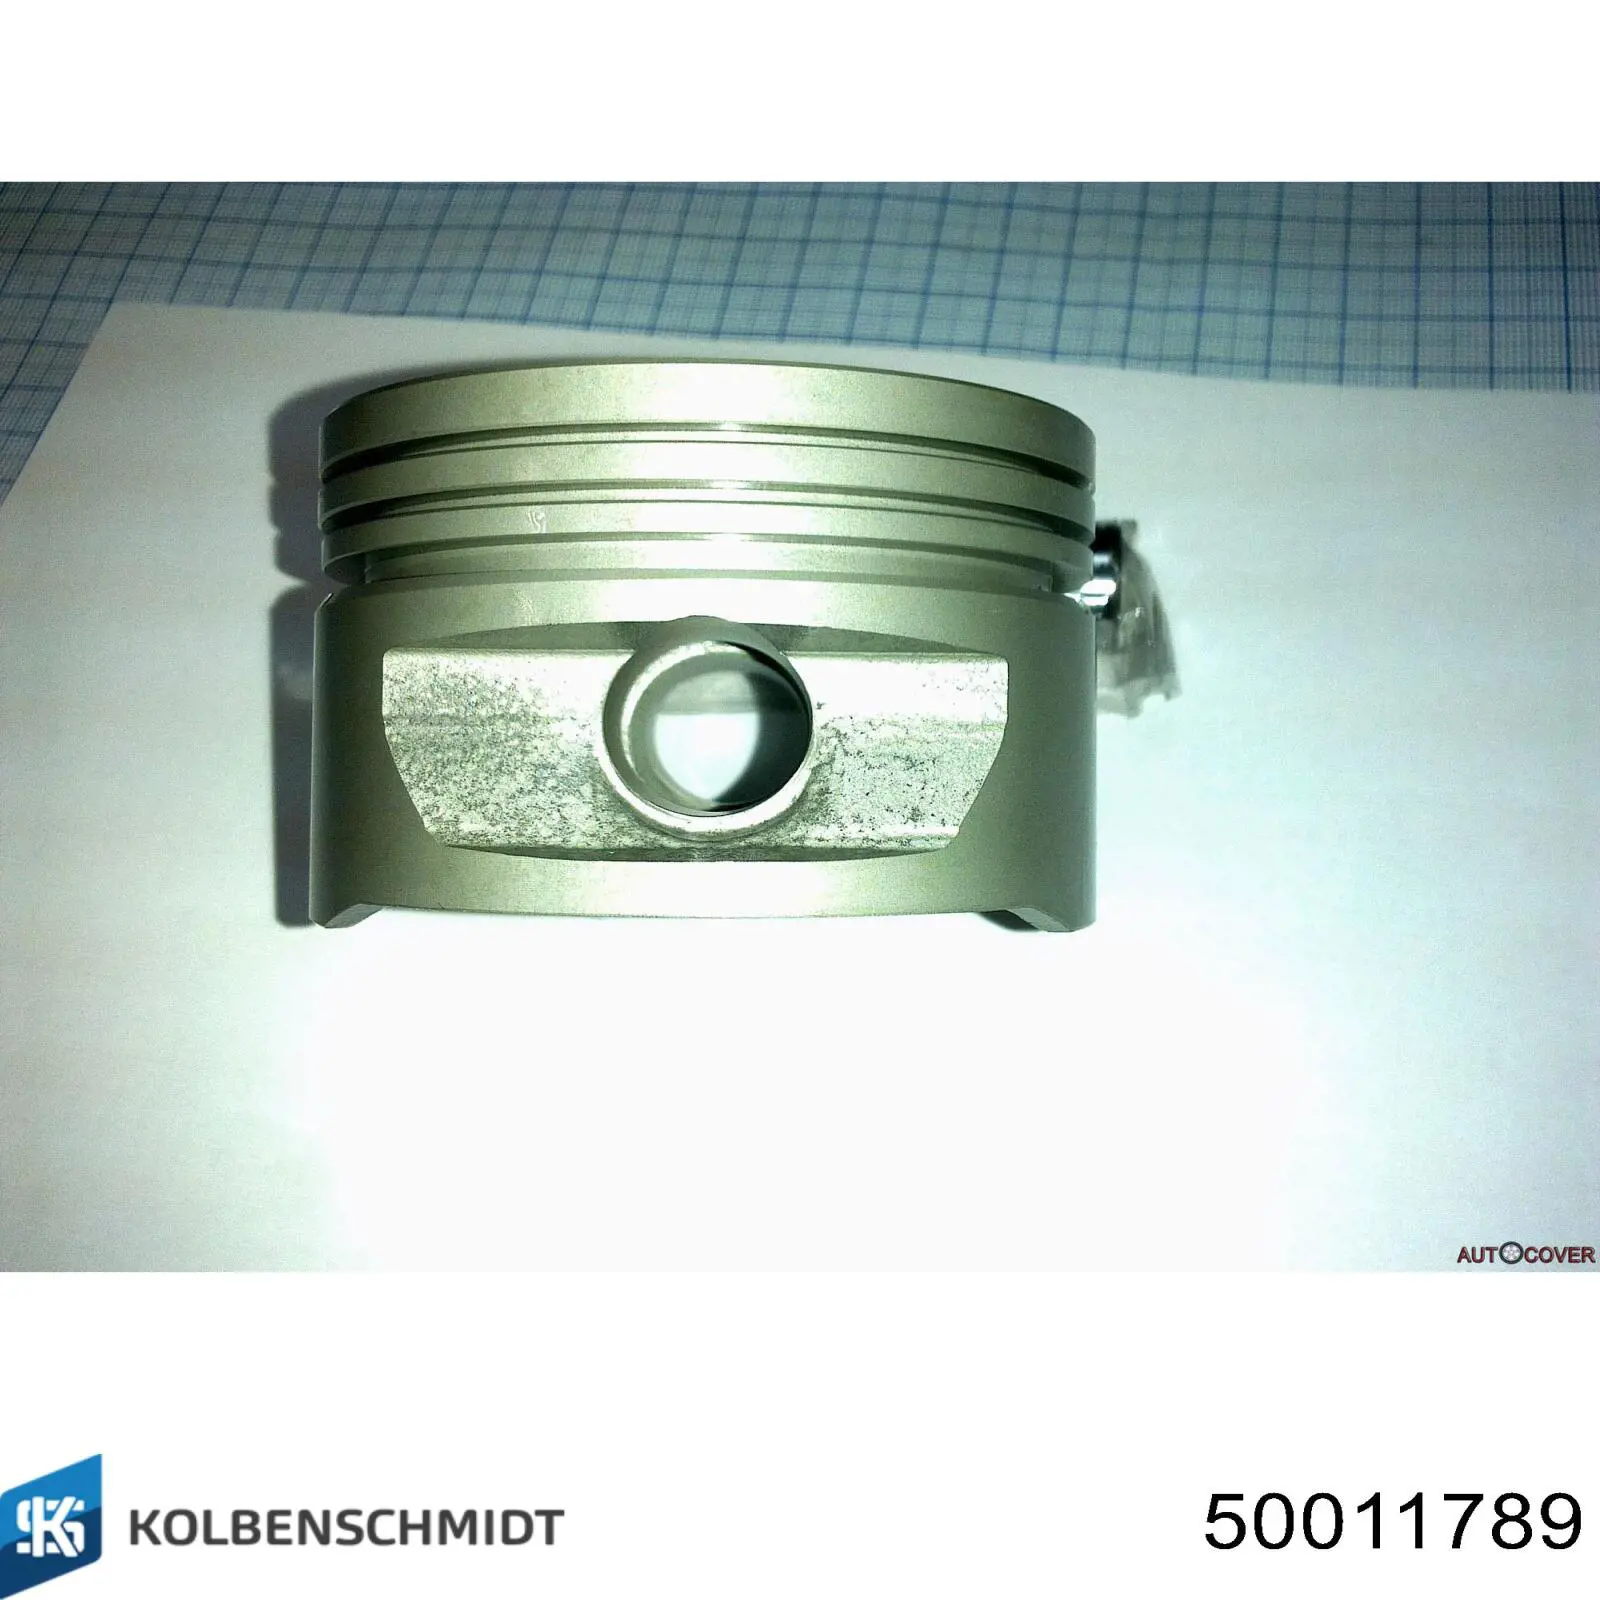 50011789 Kolbenschmidt кільця поршневі комплект на мотор, 2-й ремонт (+0,50)